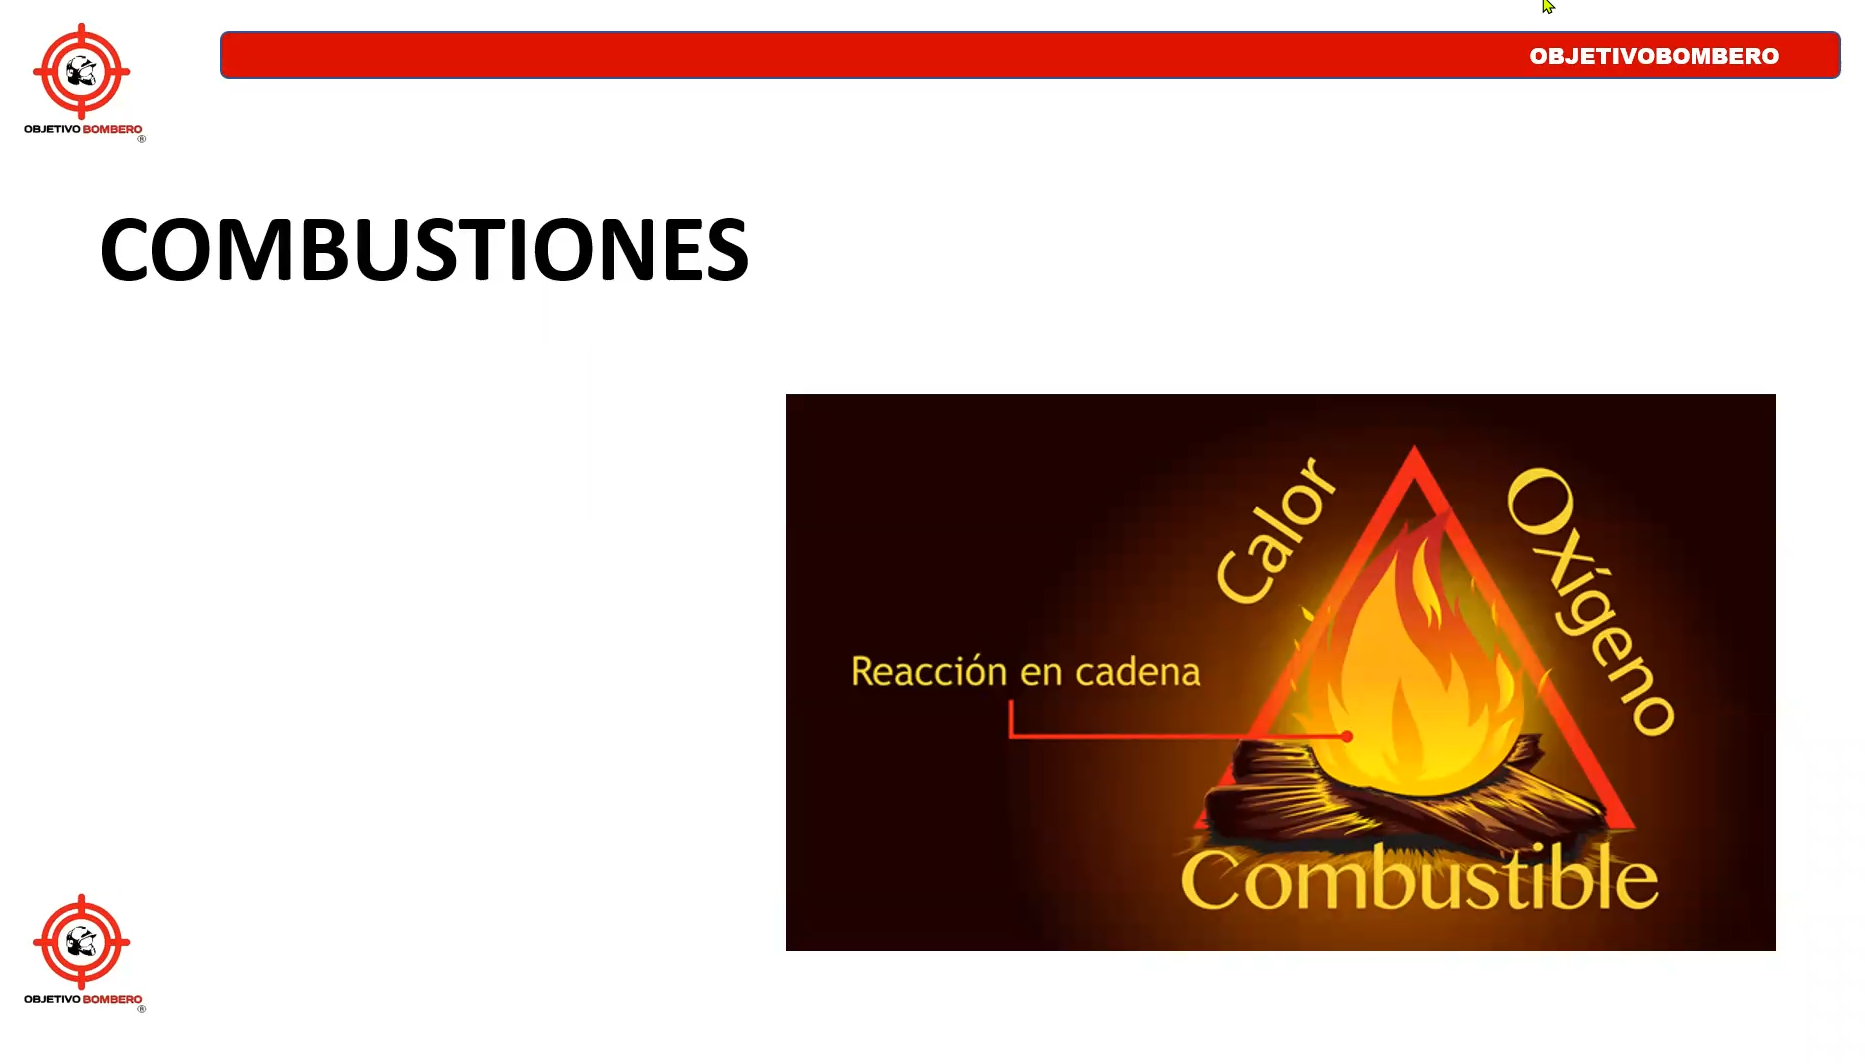 Combustiones